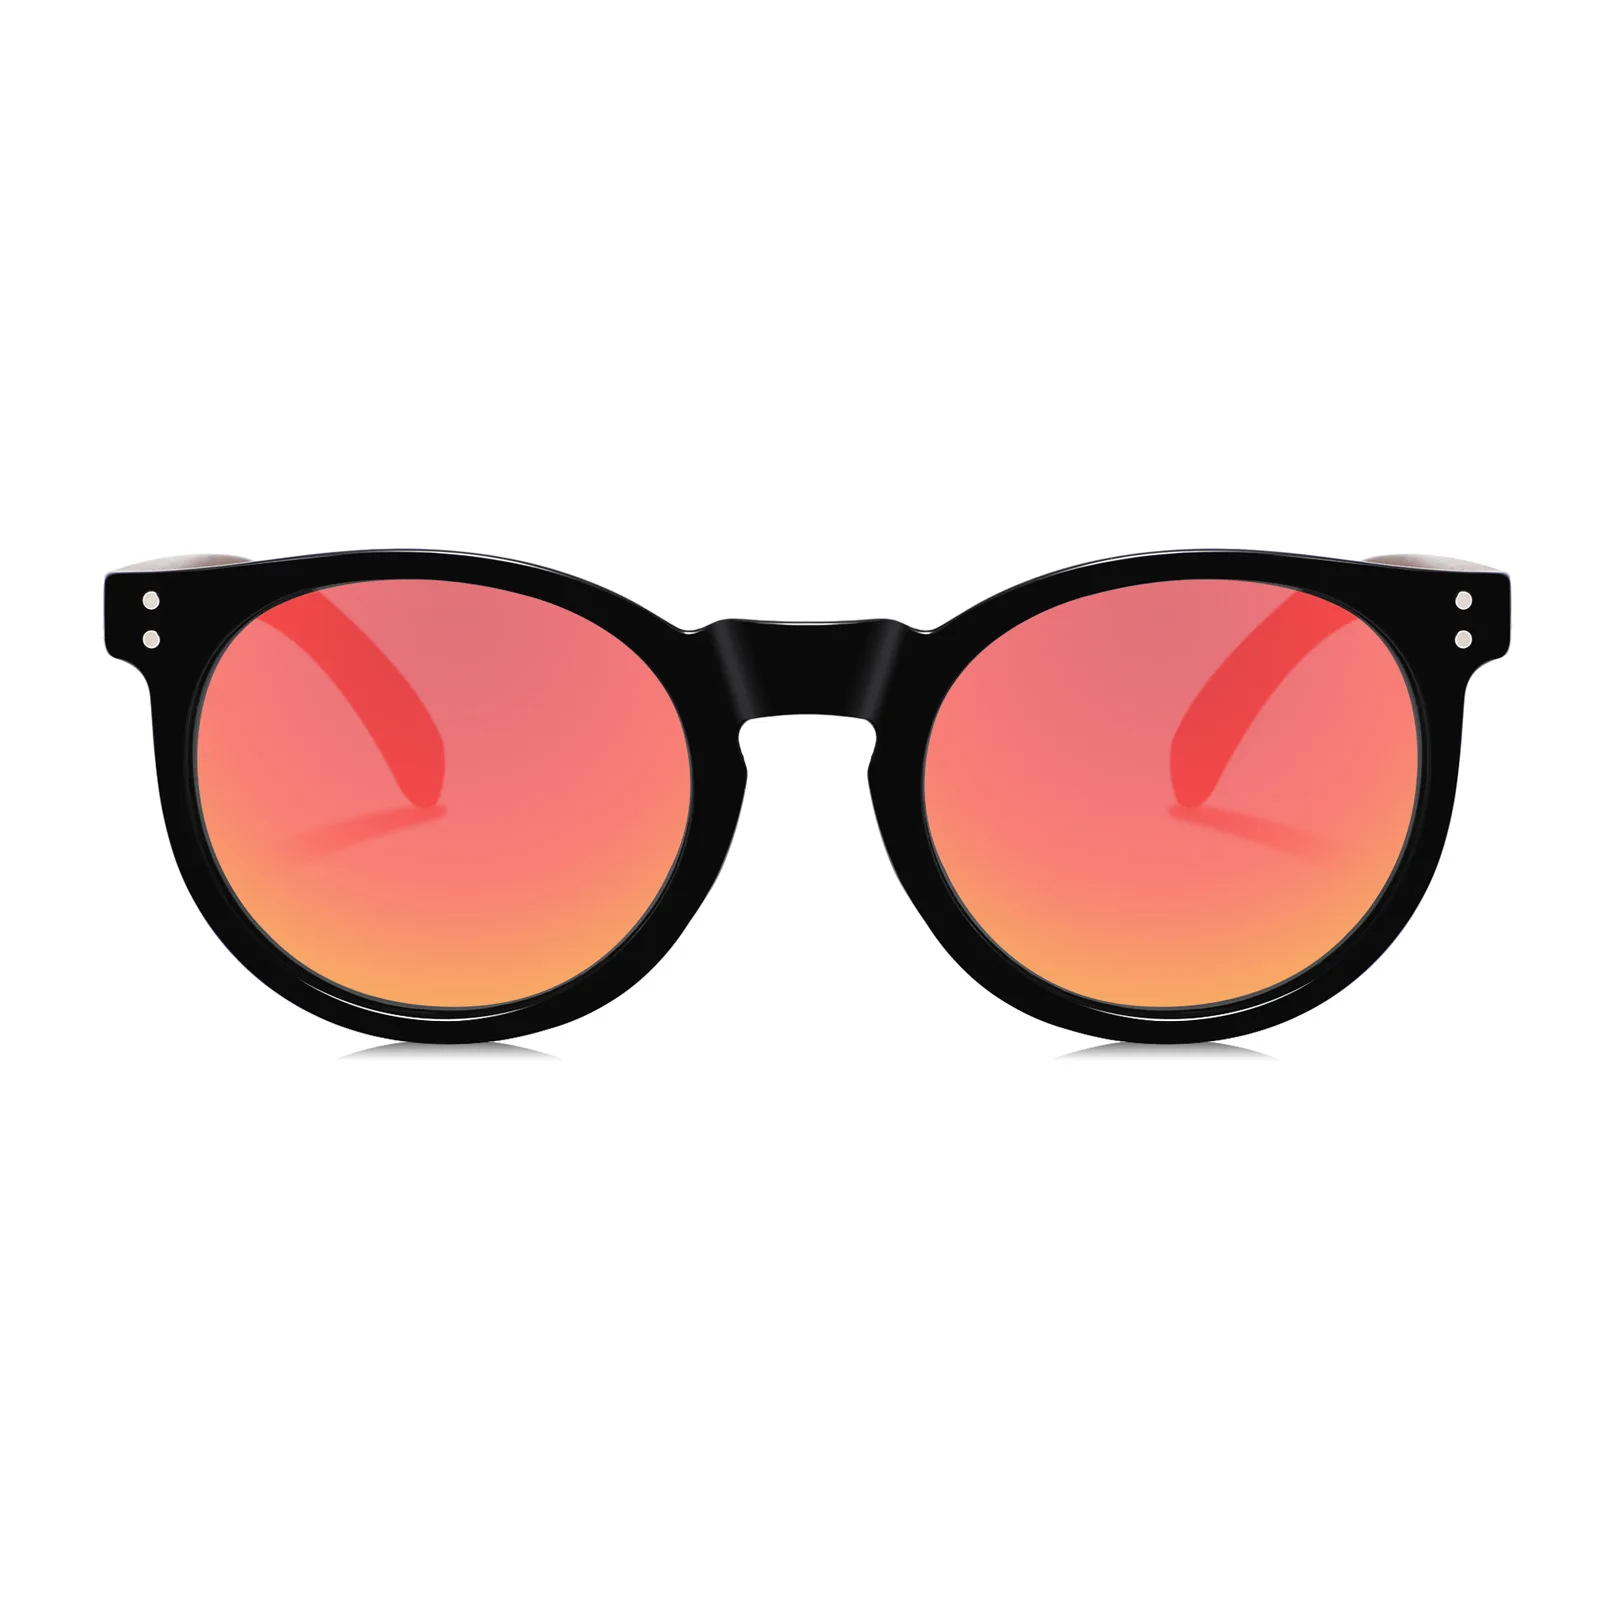 2021 New High Quality Round Sunglasses Women Men Polarized UV400